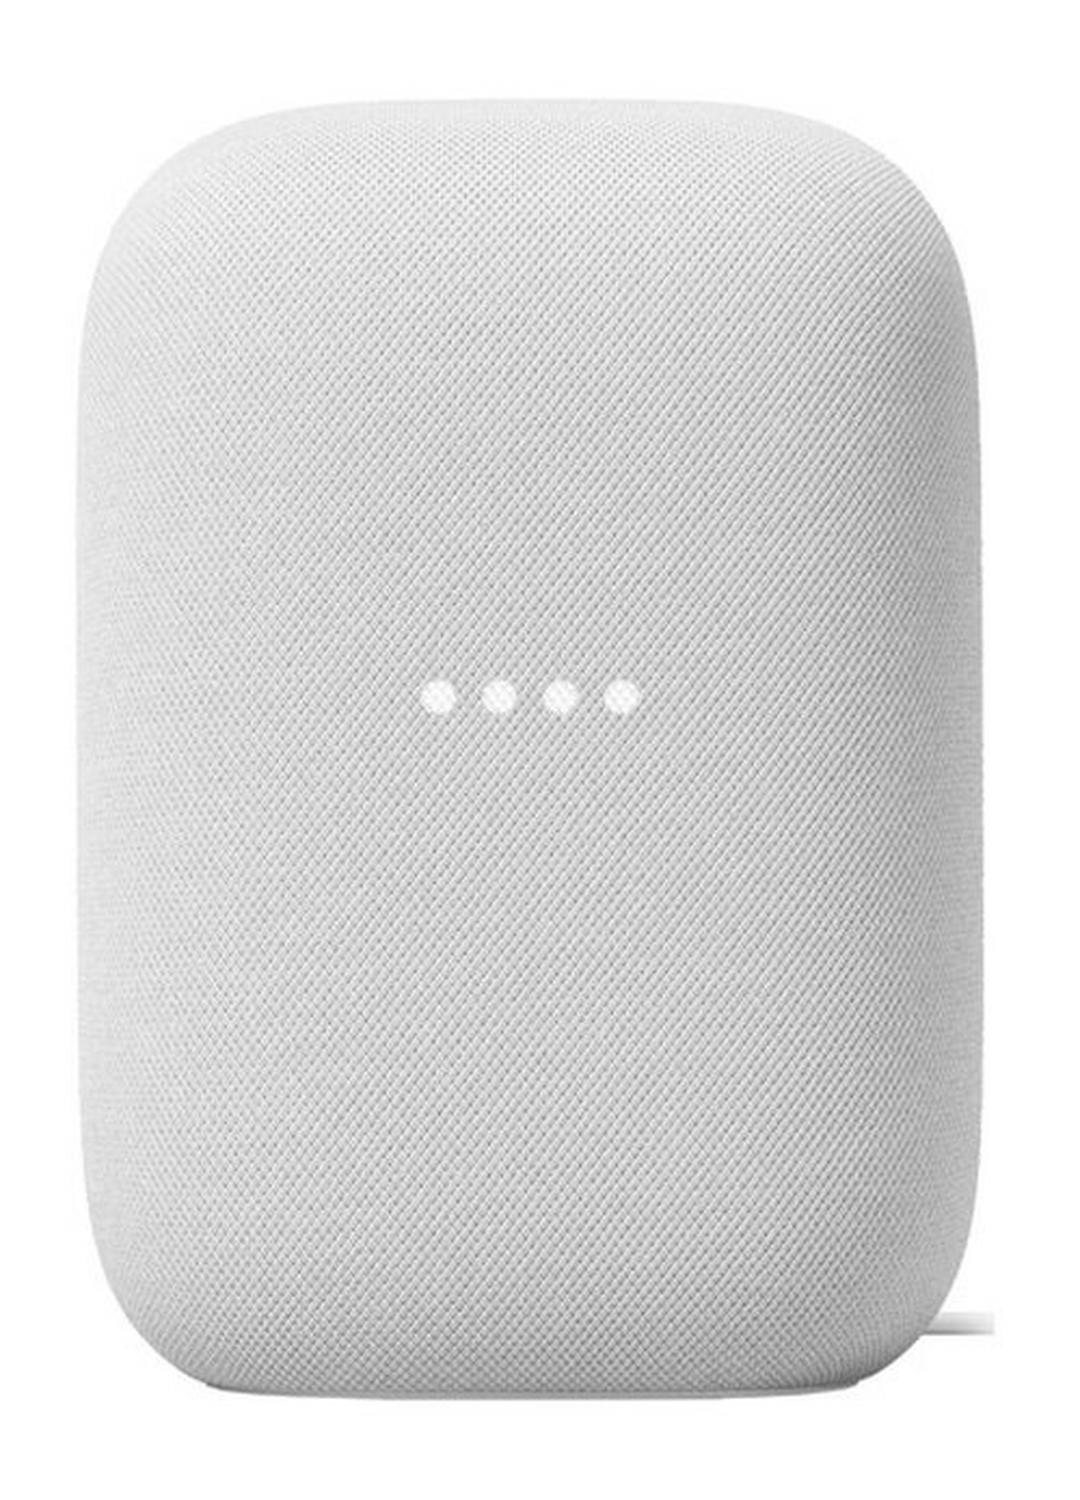 Google Nest Audio Wireless Speaker - Chalk